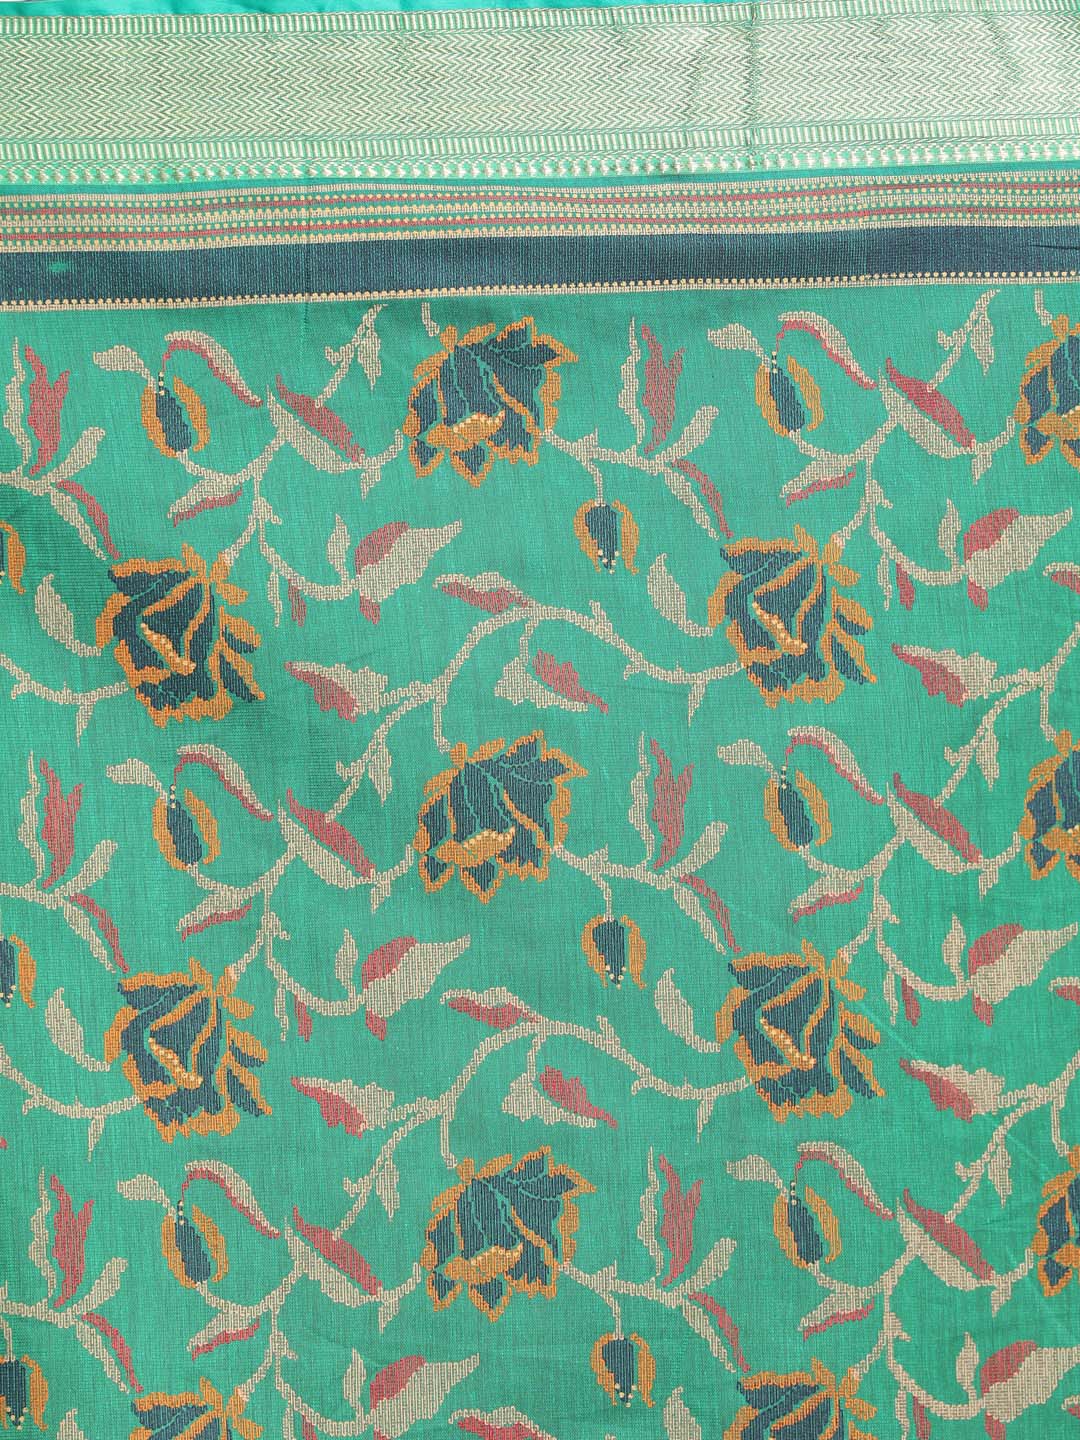 Indethnic Printed Cotton Blend Saree in Green - Saree Detail View